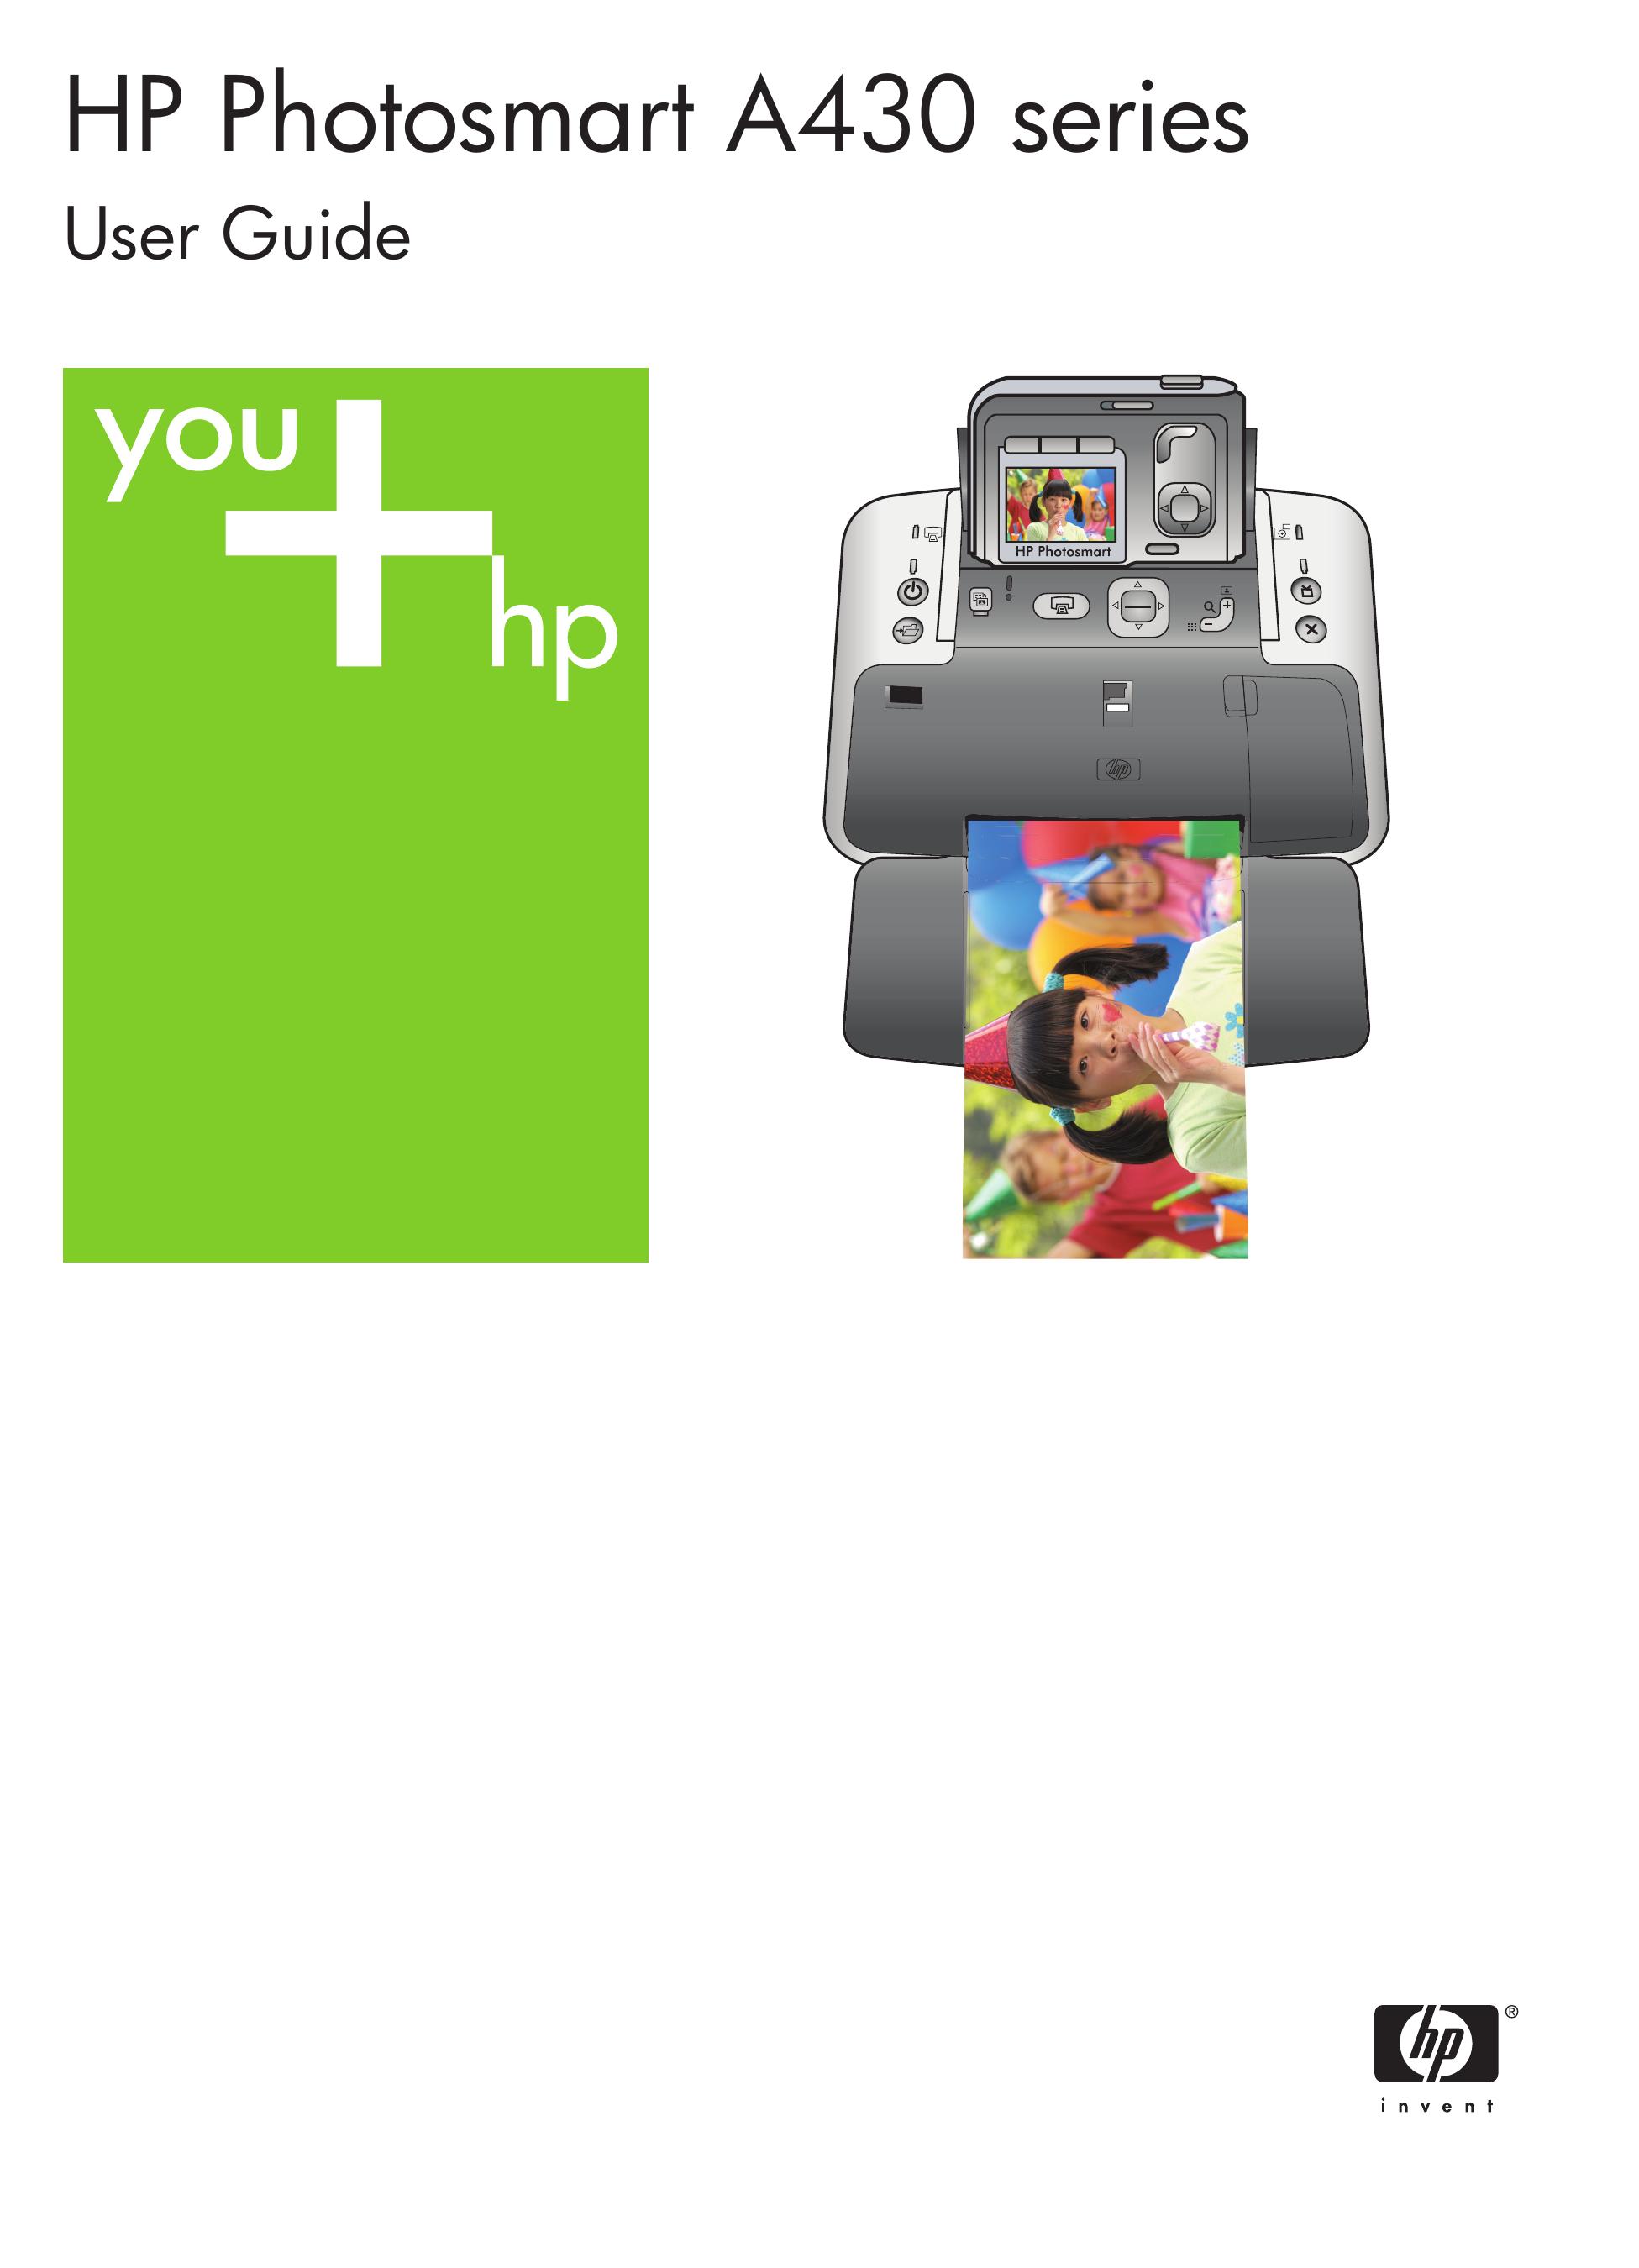 HP (Hewlett-Packard) A430 Photo Printer User Manual